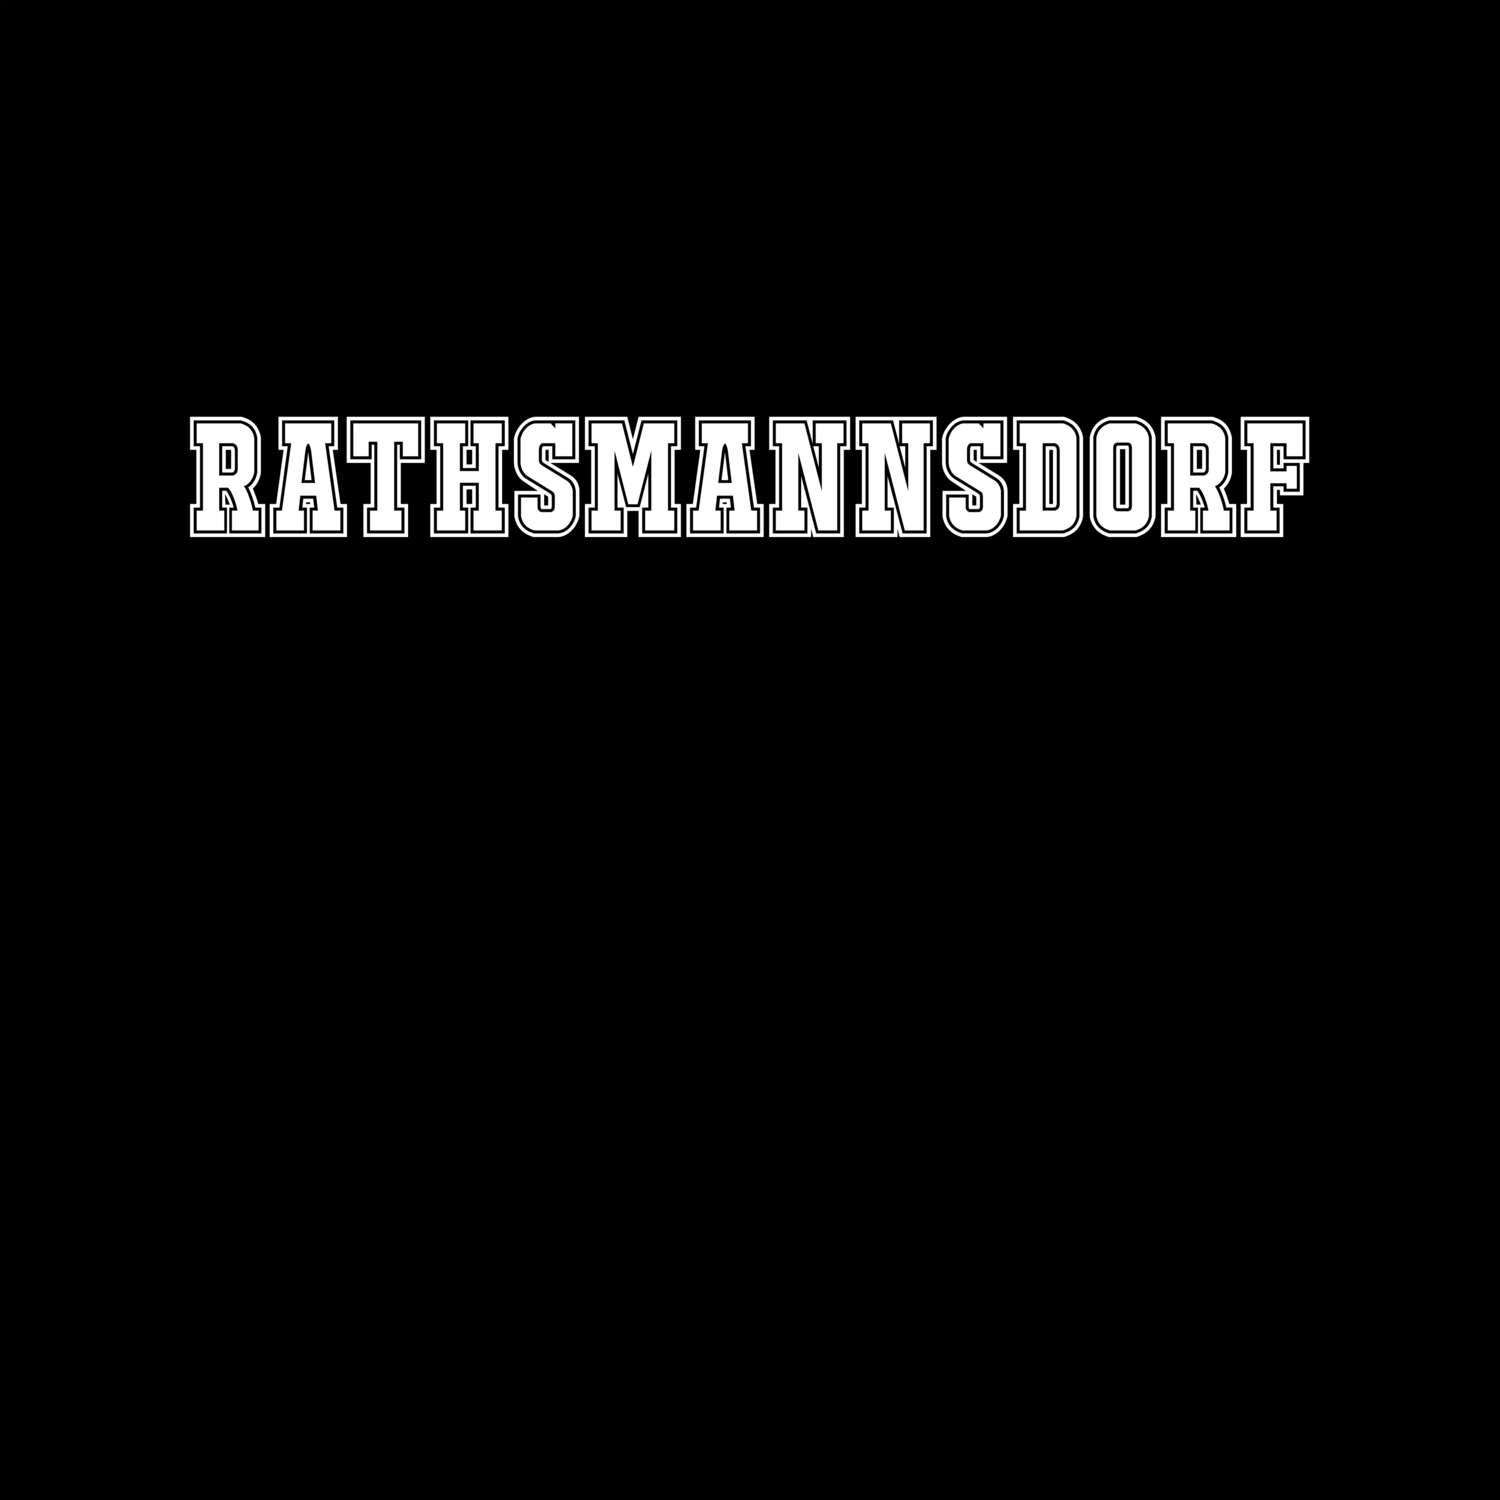 Rathsmannsdorf T-Shirt »Classic«